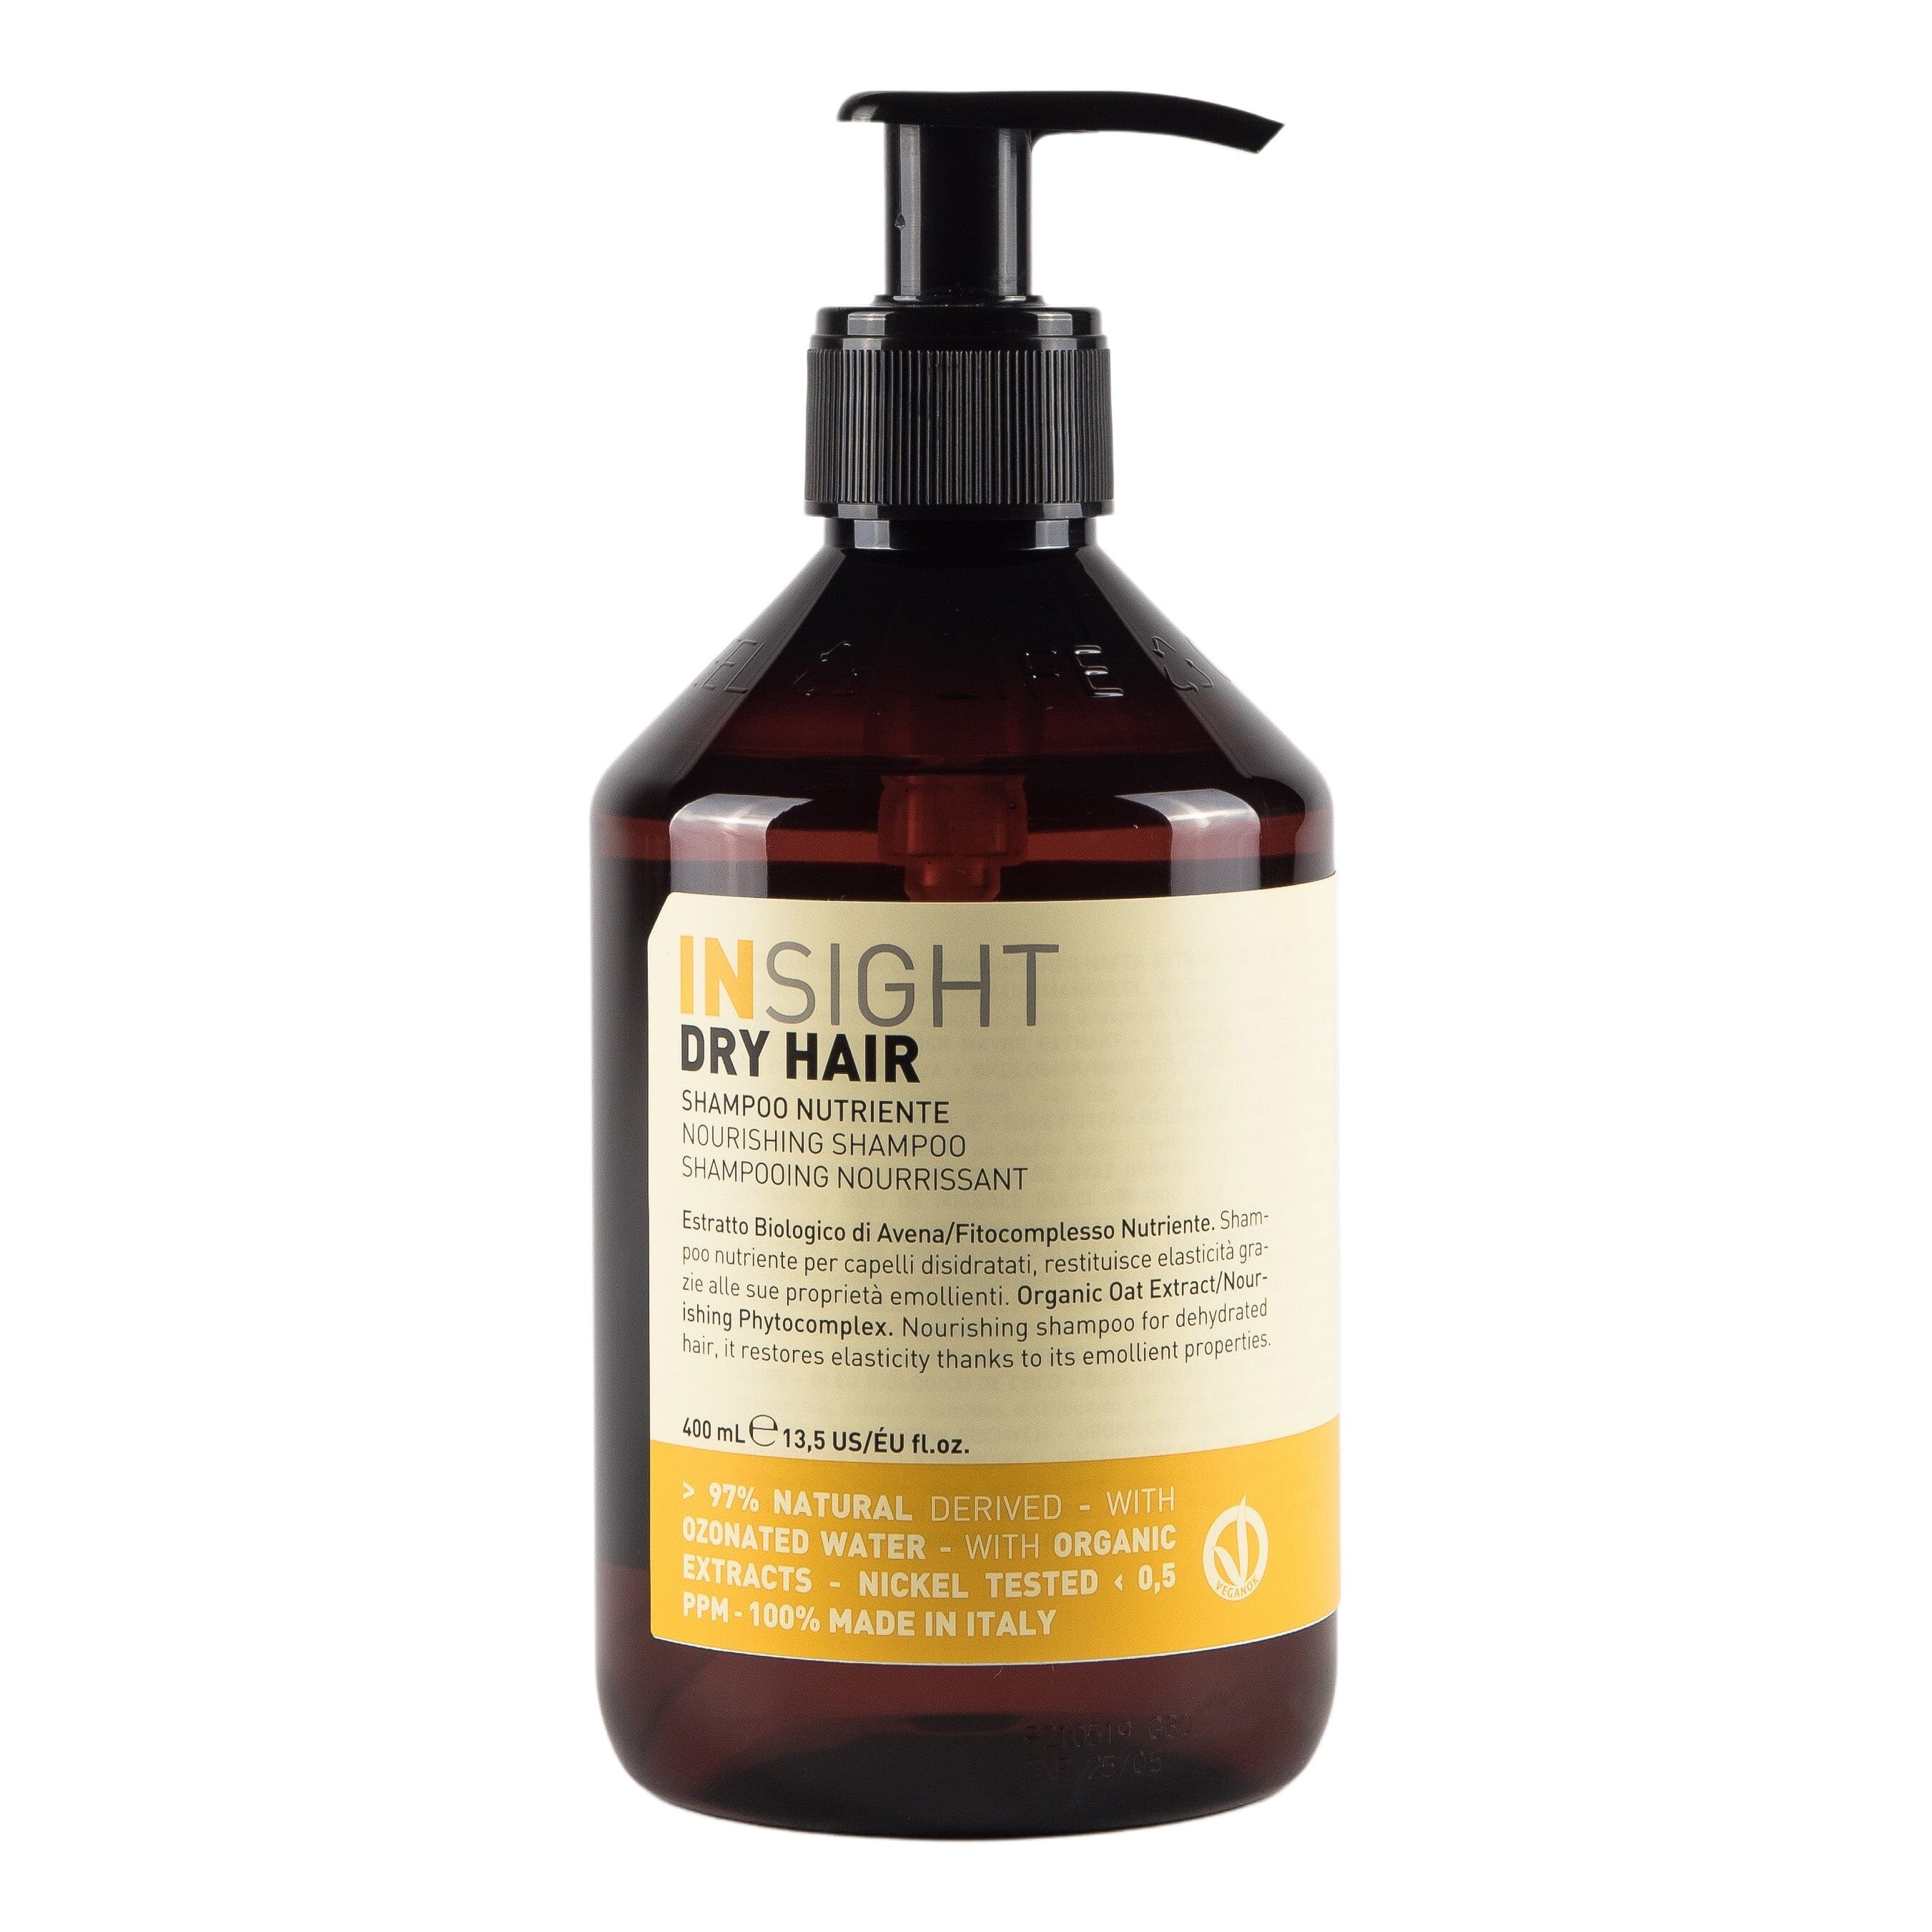 Insight Dry Hair - Nourishing sjampo 400 ml